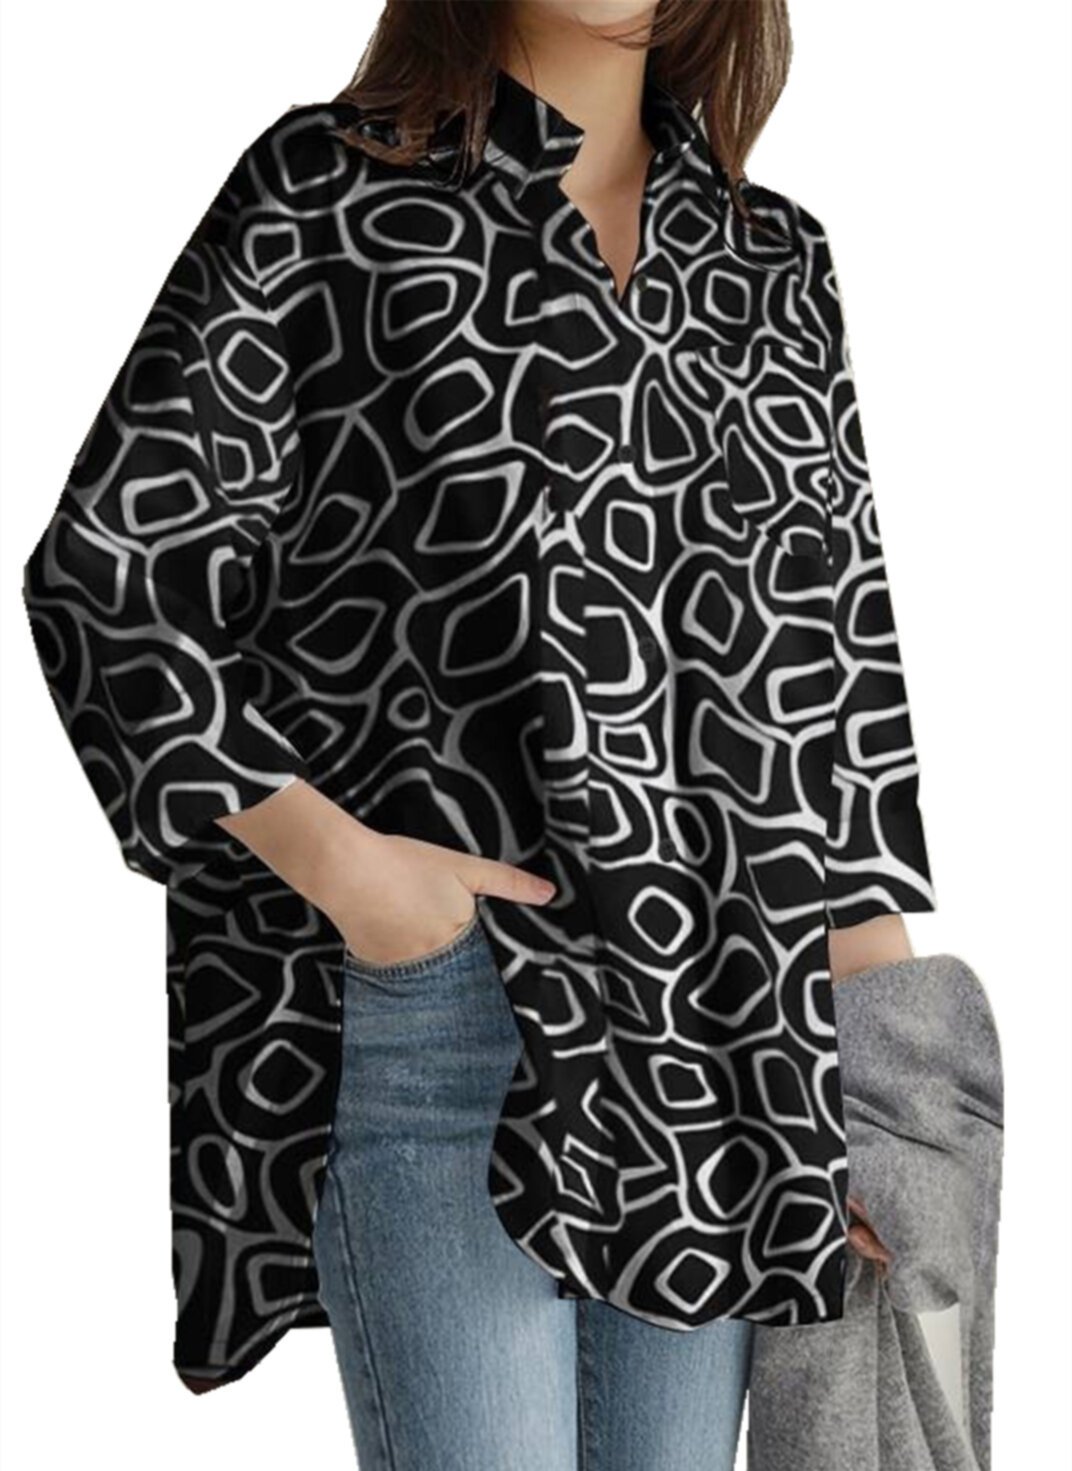 Fashion printed loose fitting casual long sleeved shirt